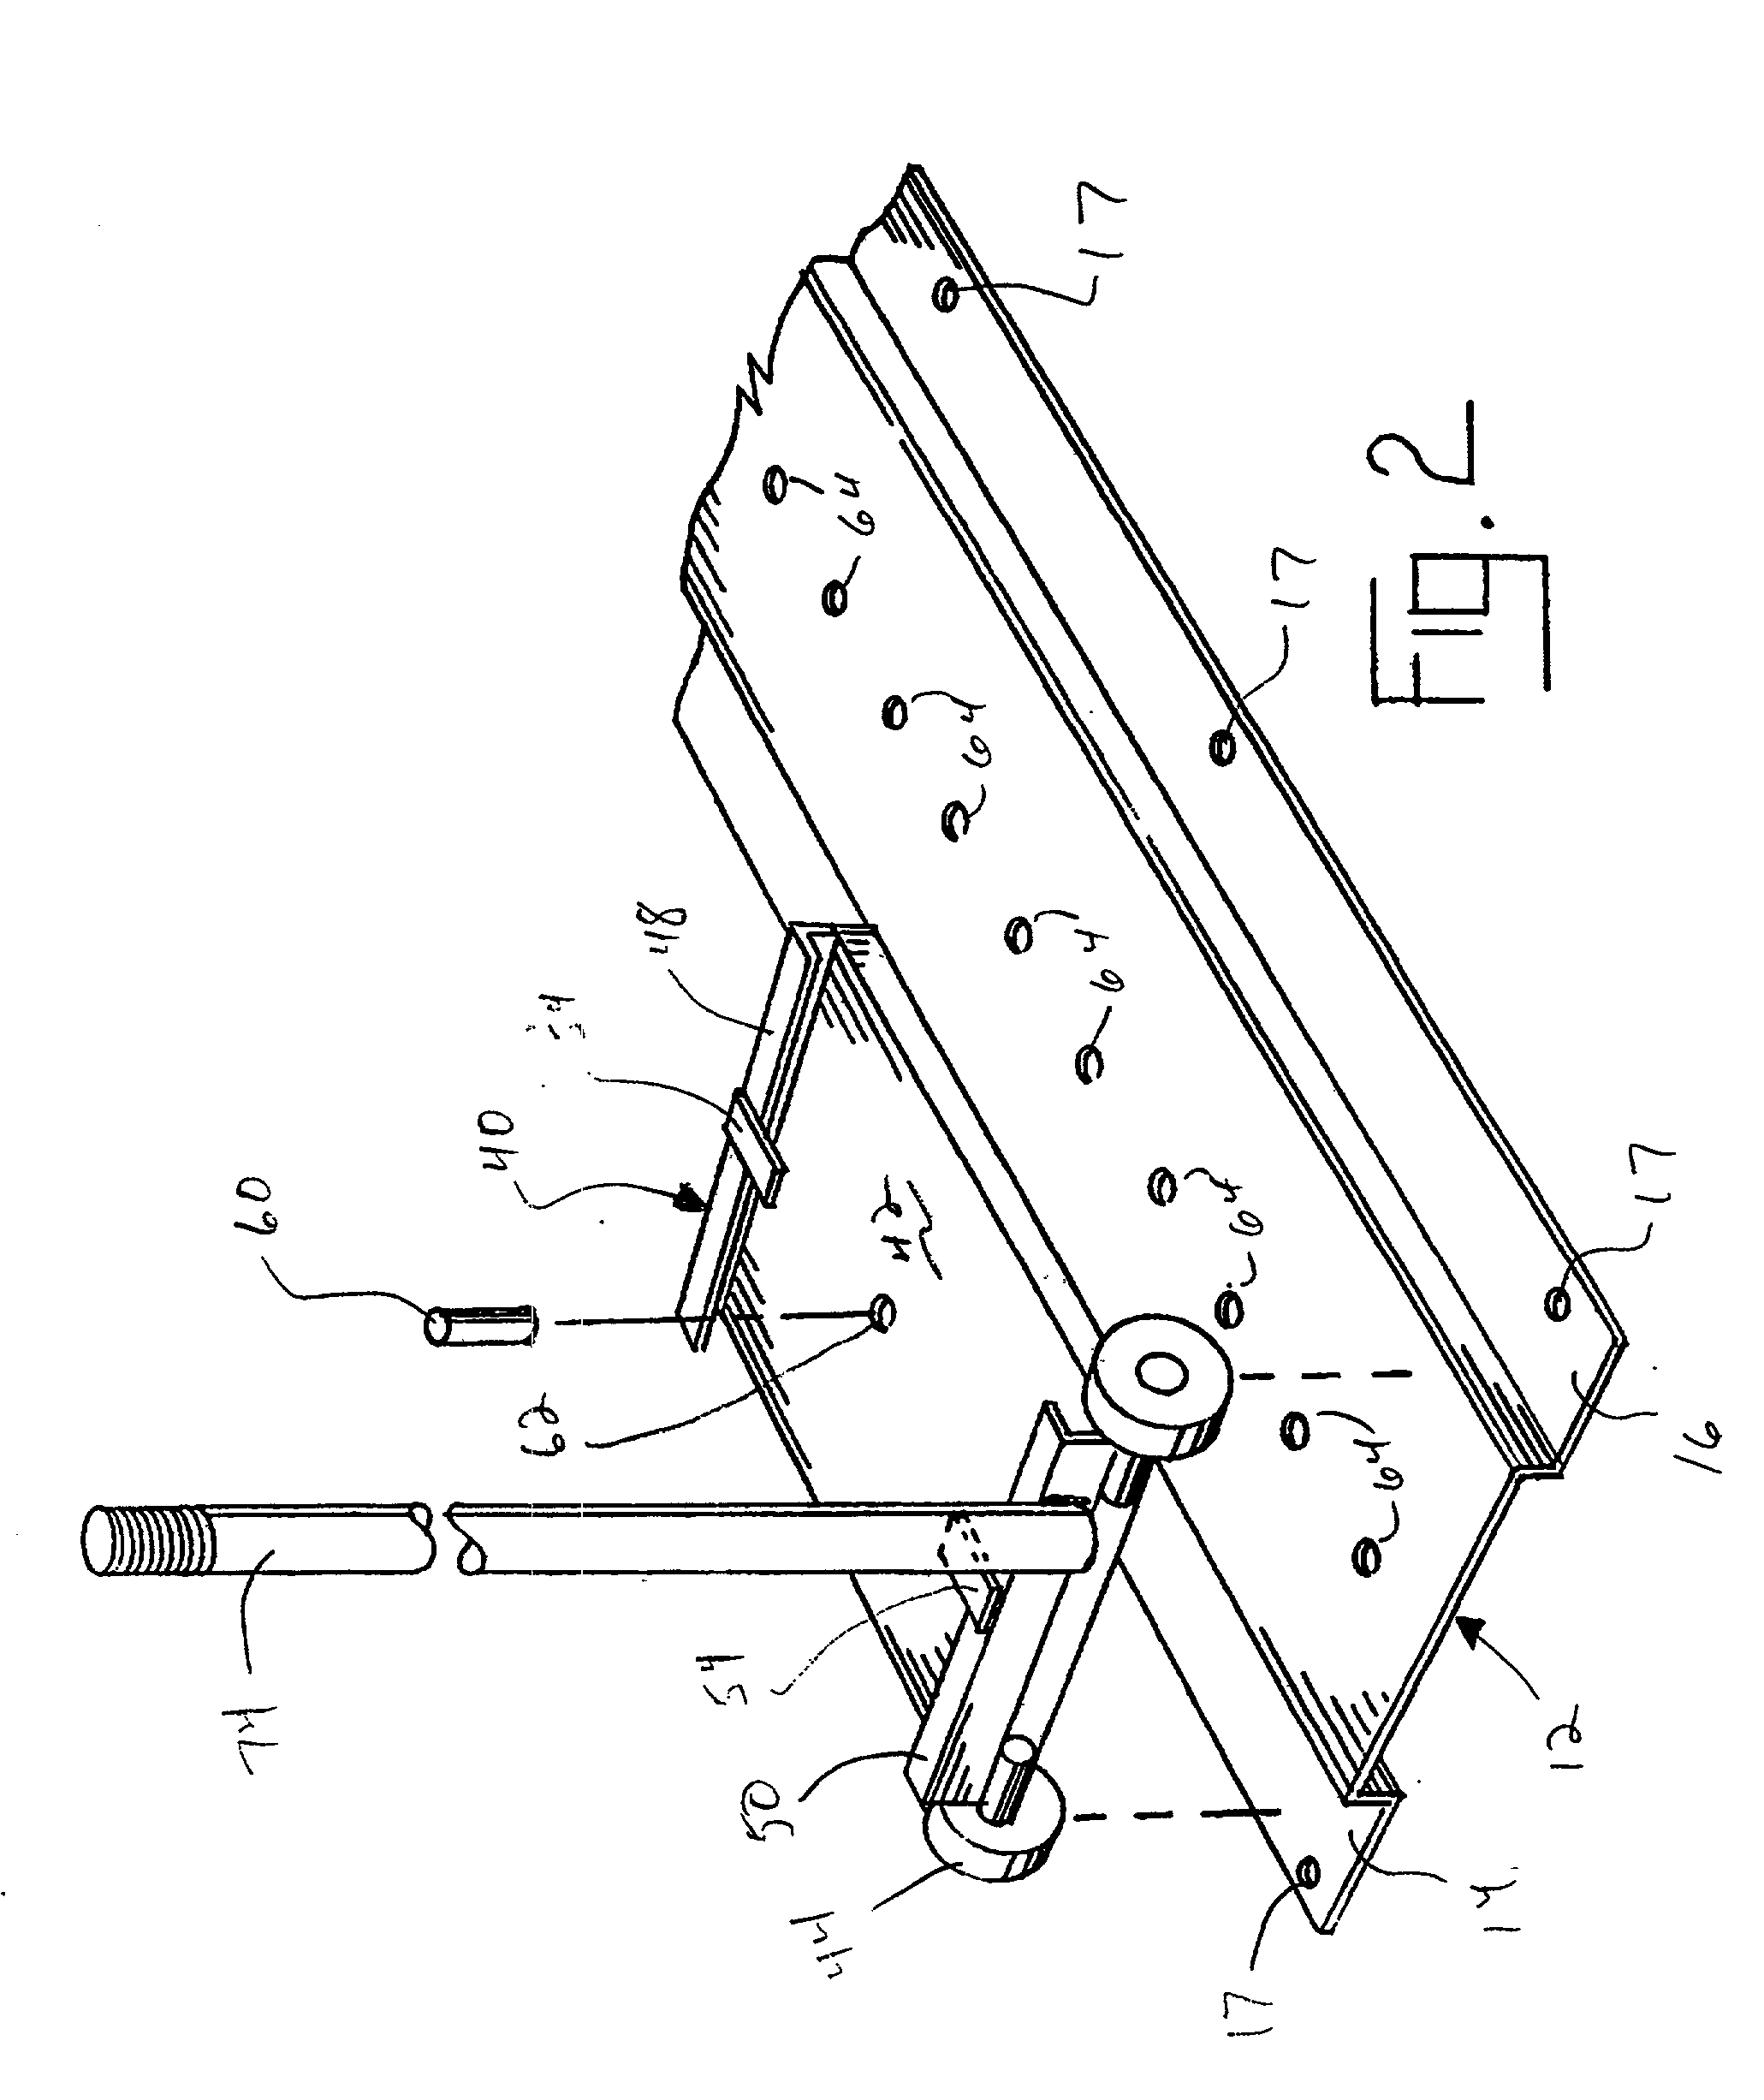 Manually positioned wheel chocking apparatus